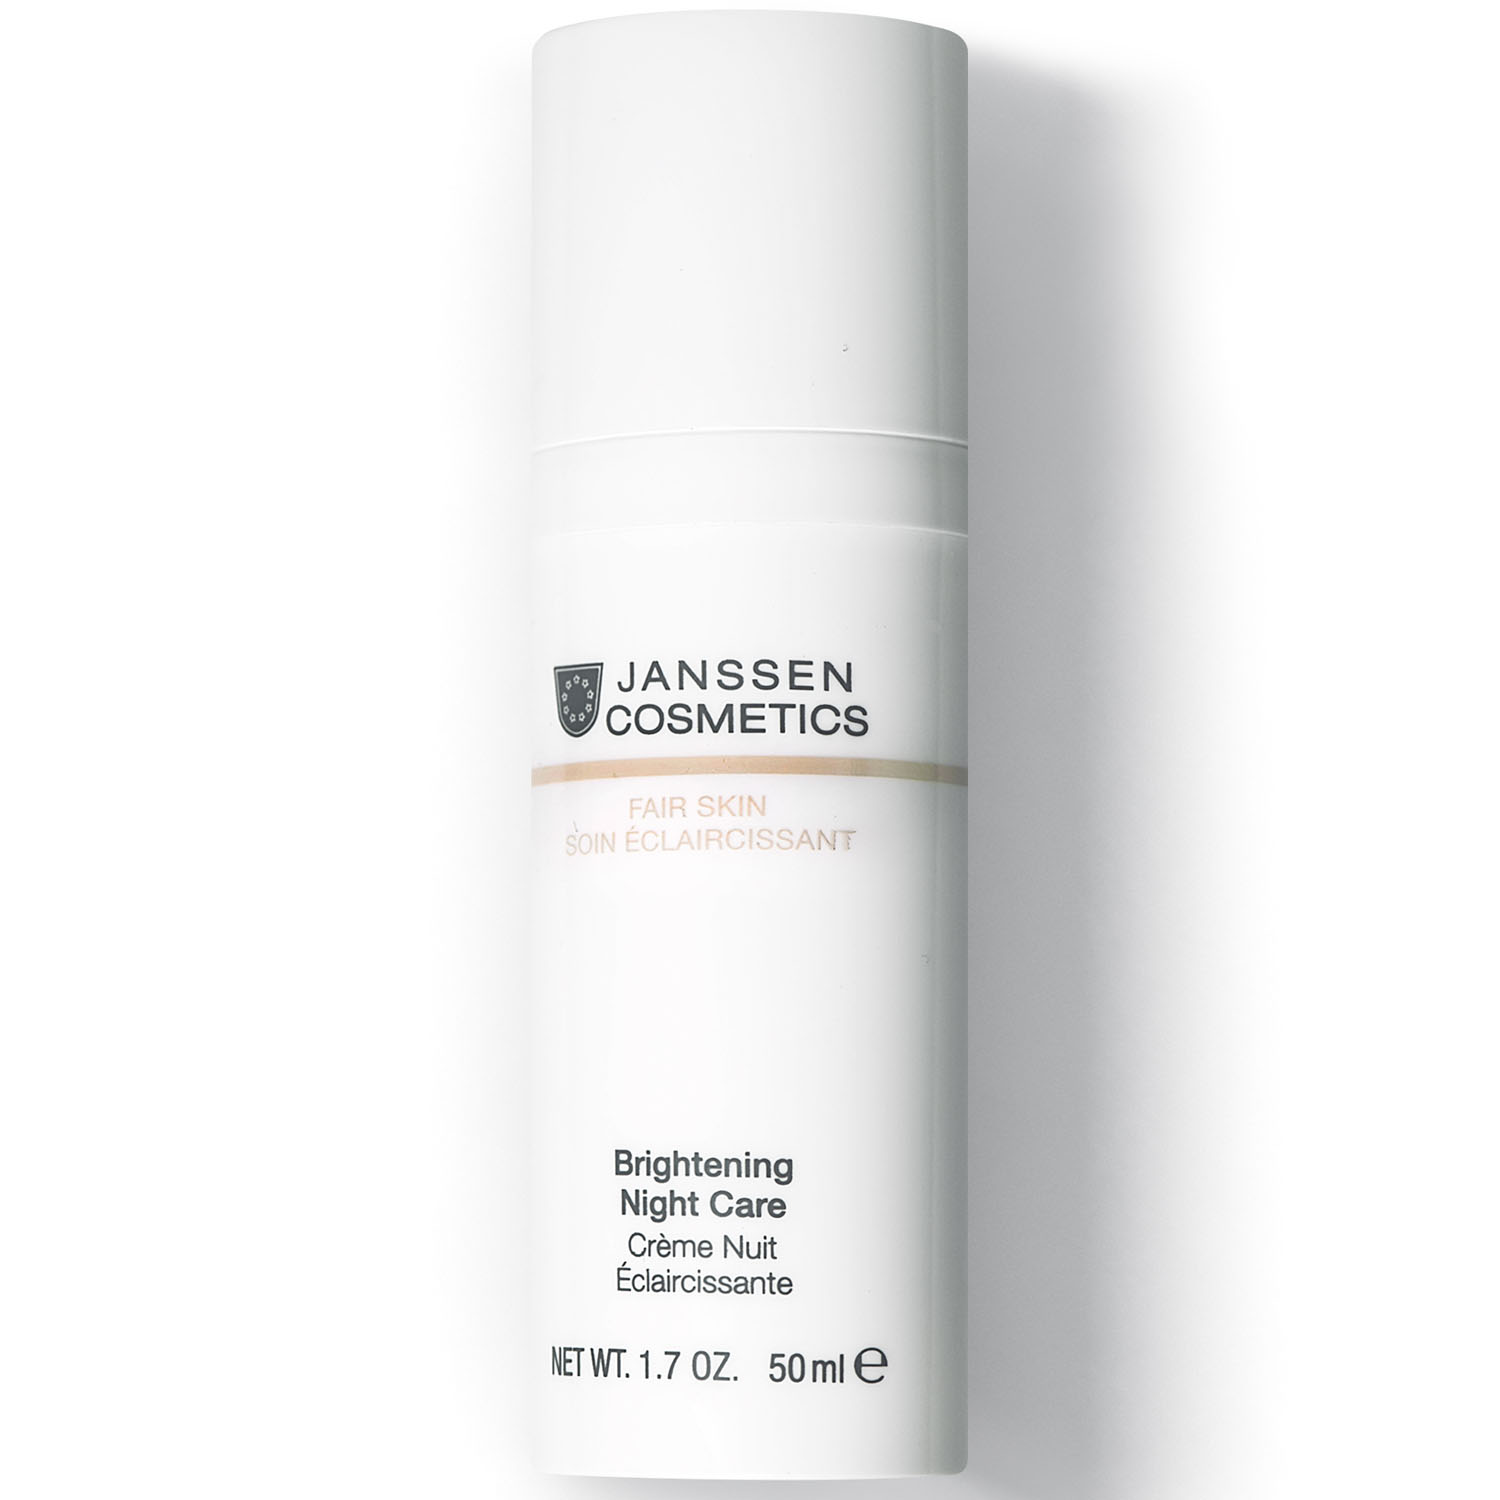 Janssen Cosmetics Осветляющий ночной крем Brightening Night Care, 50 мл (Janssen Cosmetics, Fair Skin)